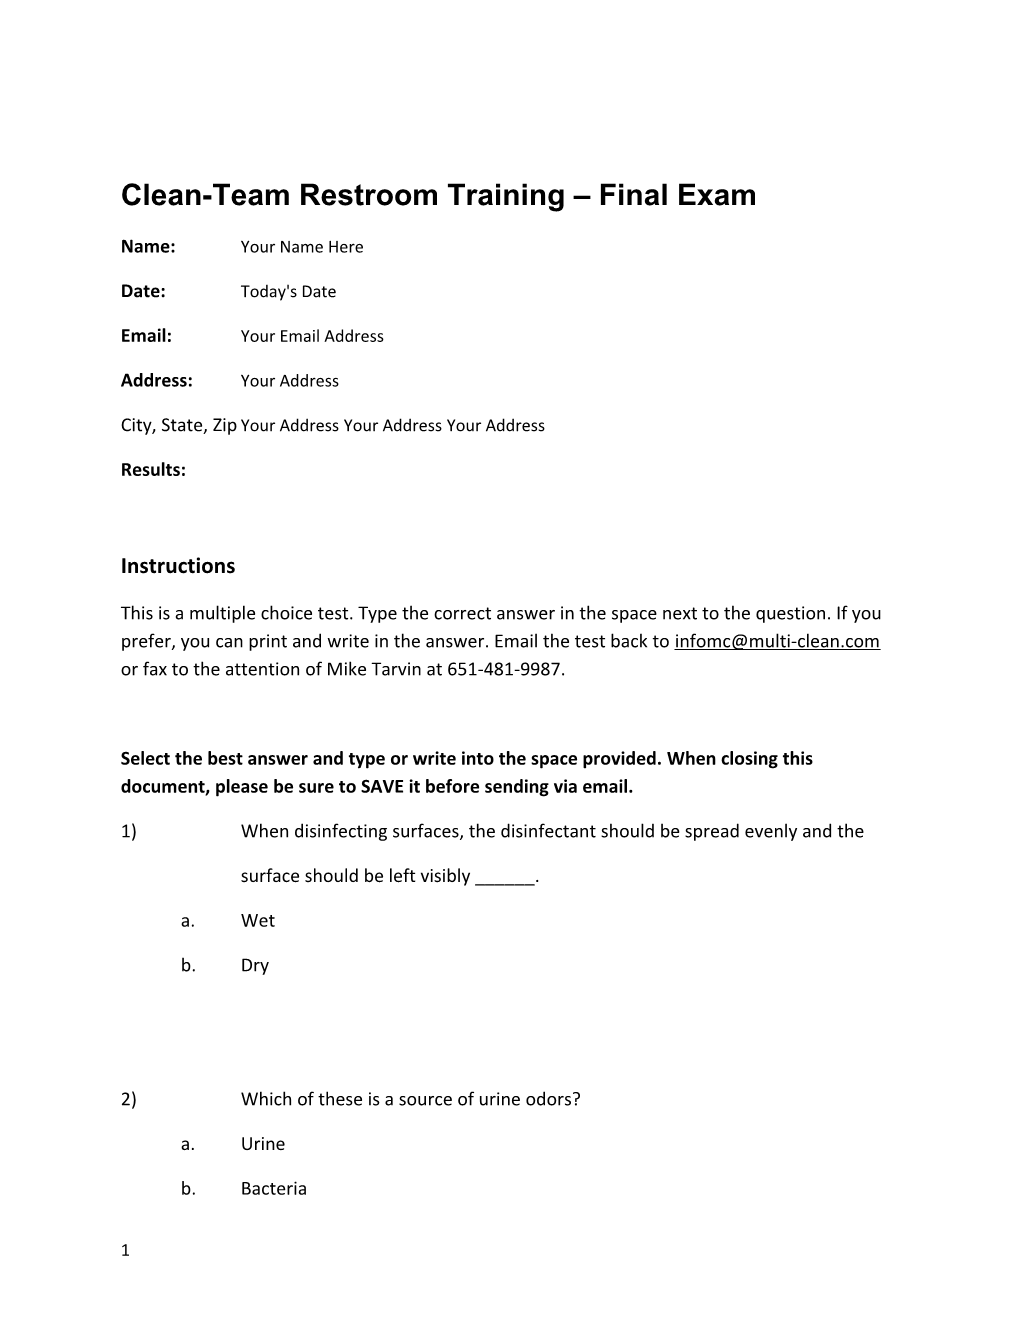 Clean-Team Restroom Training Final Exam